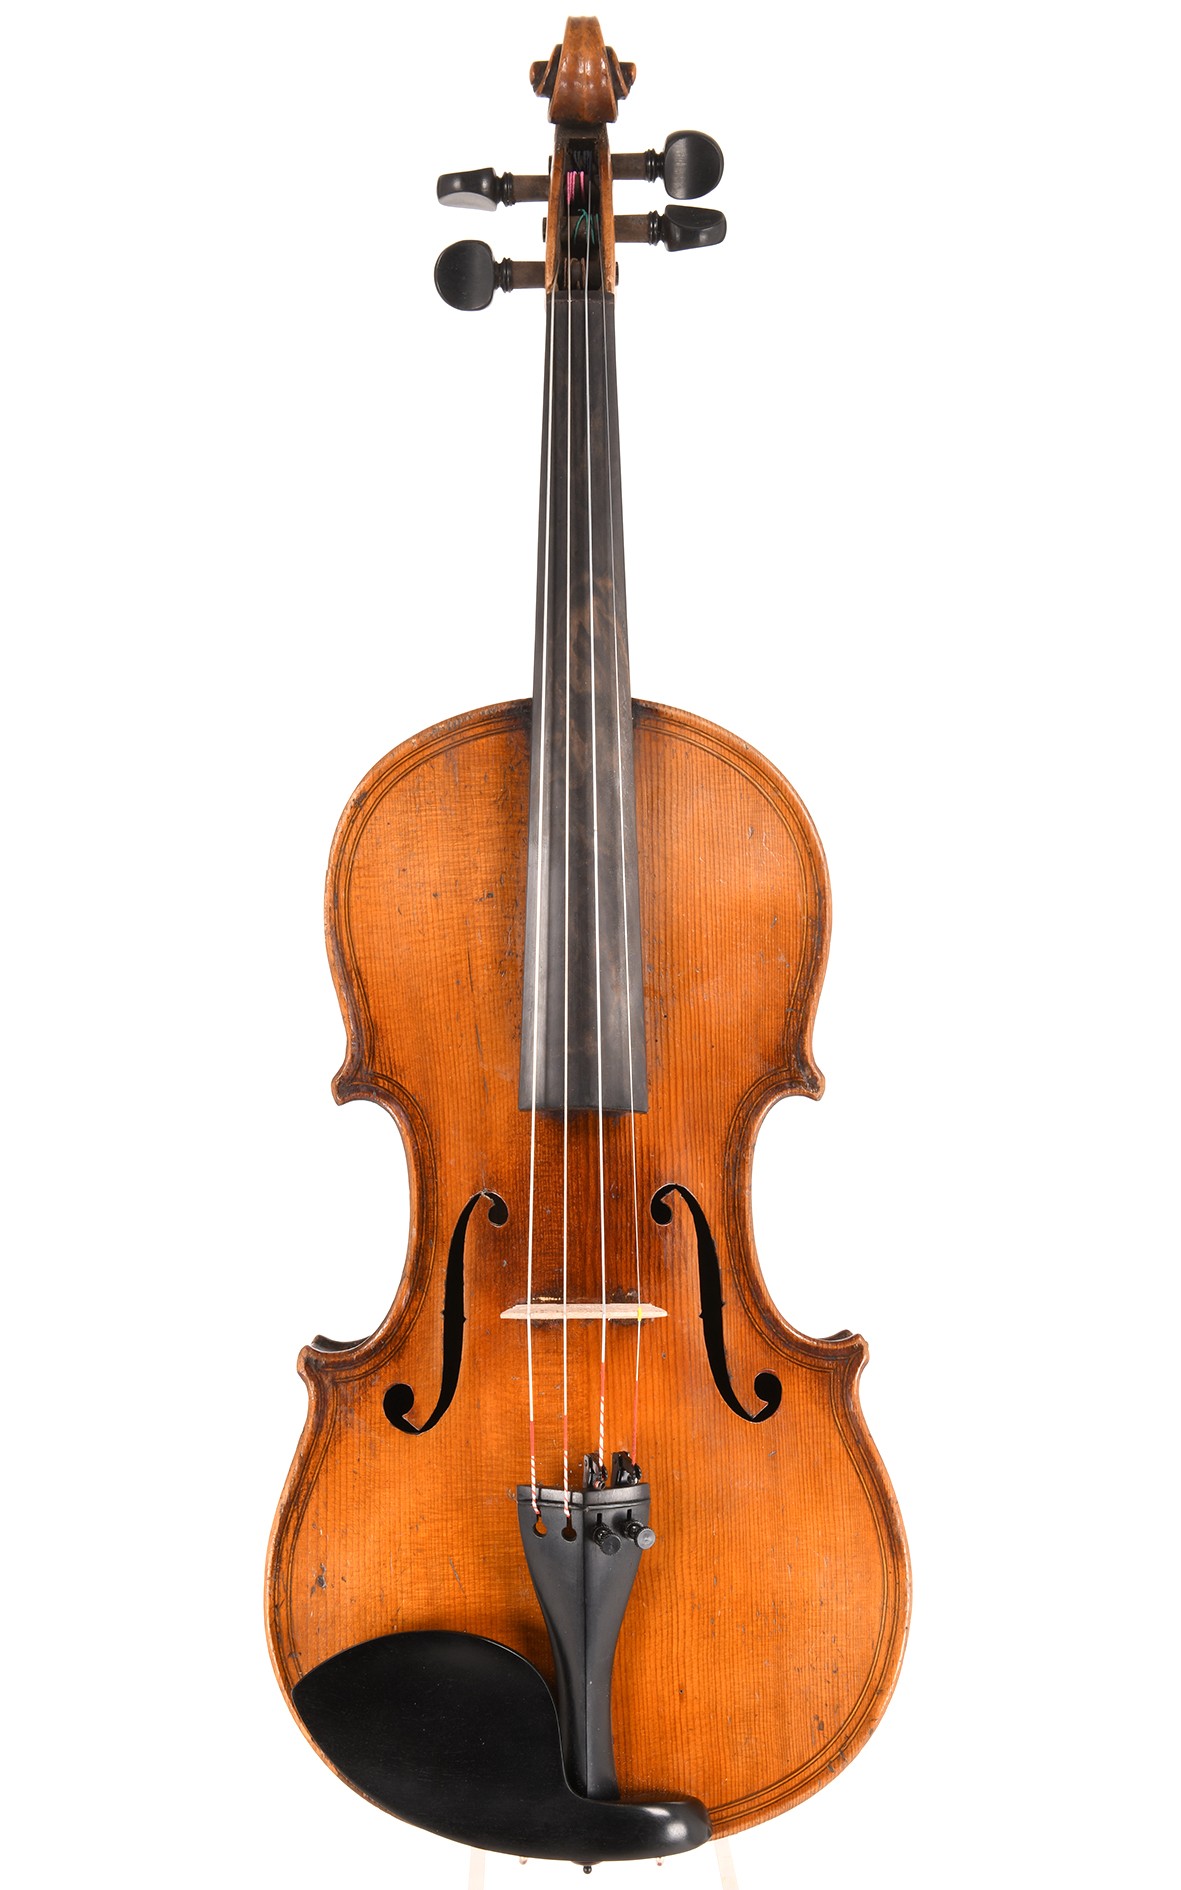 Antique violin after Maggini, Germany circa 1880